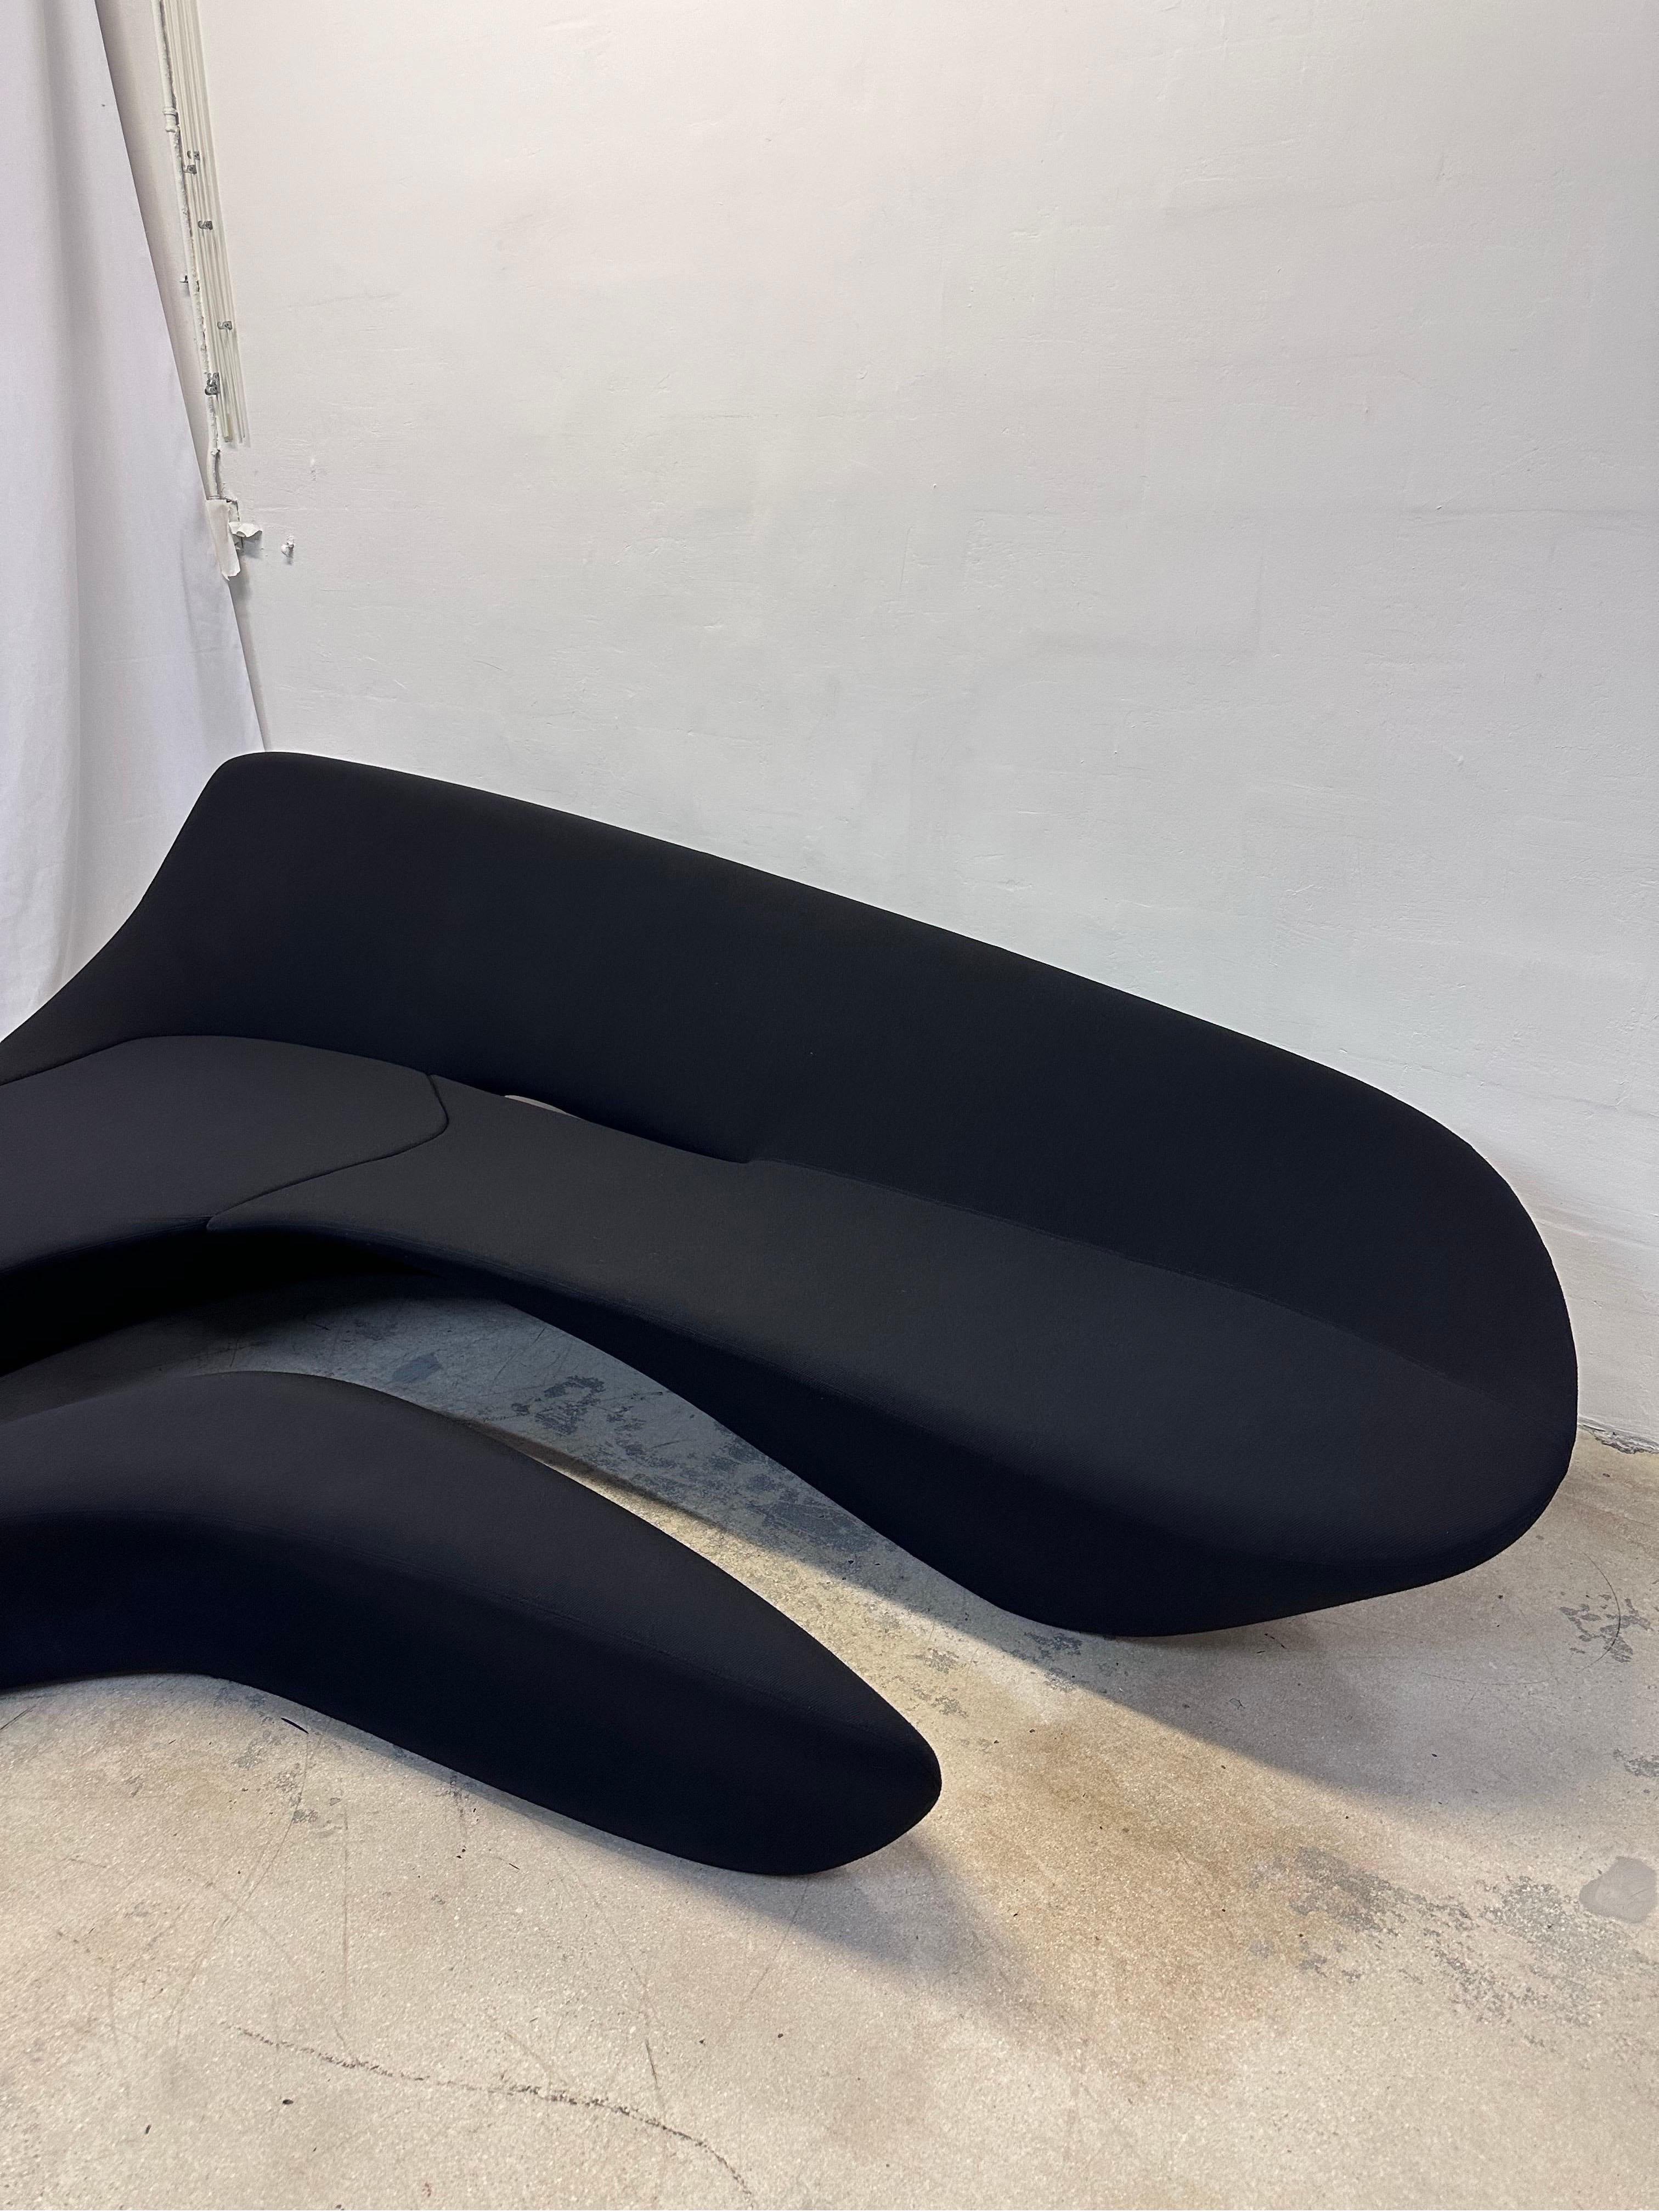 Organic Modern Zaha Hadid Moon System Sofa and Footrest for B&b Itália